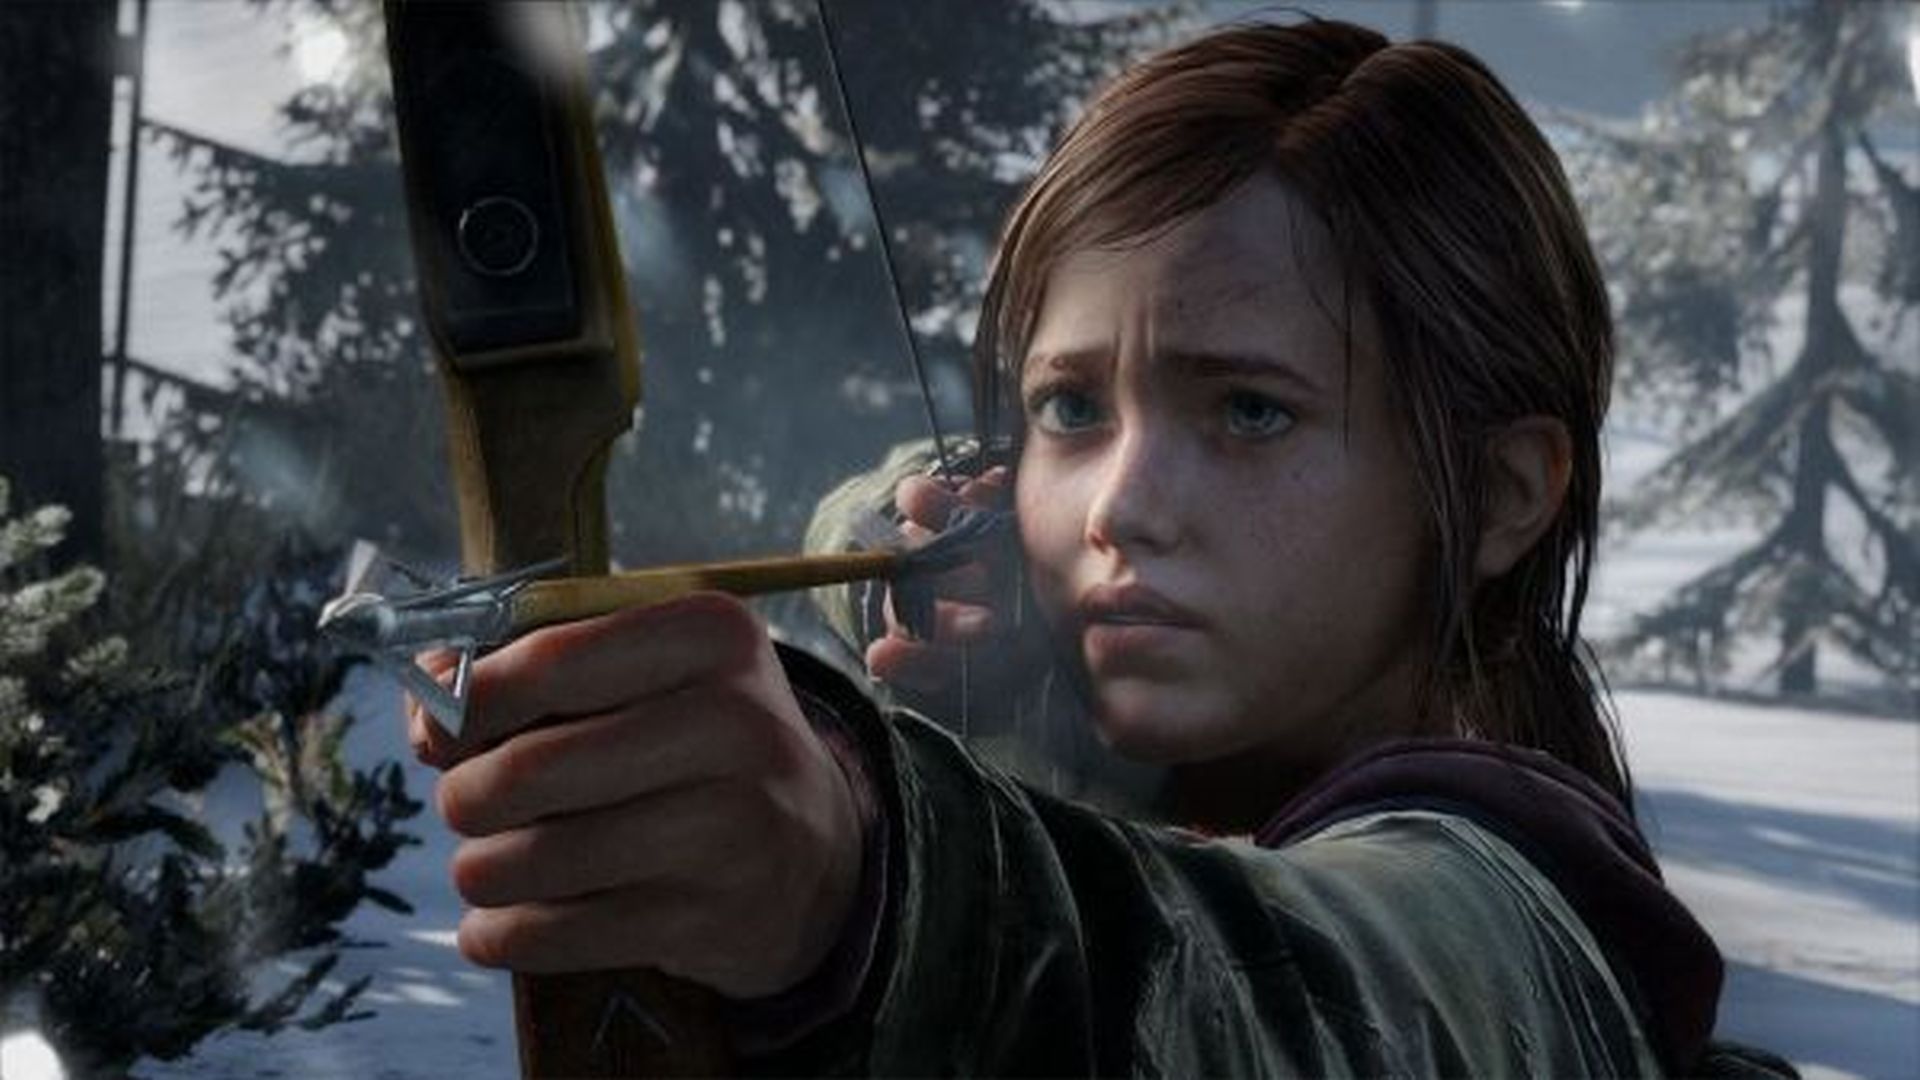 The Last Of Us Trailer Reveals Joel's Three Rules For Ellie - IMDb